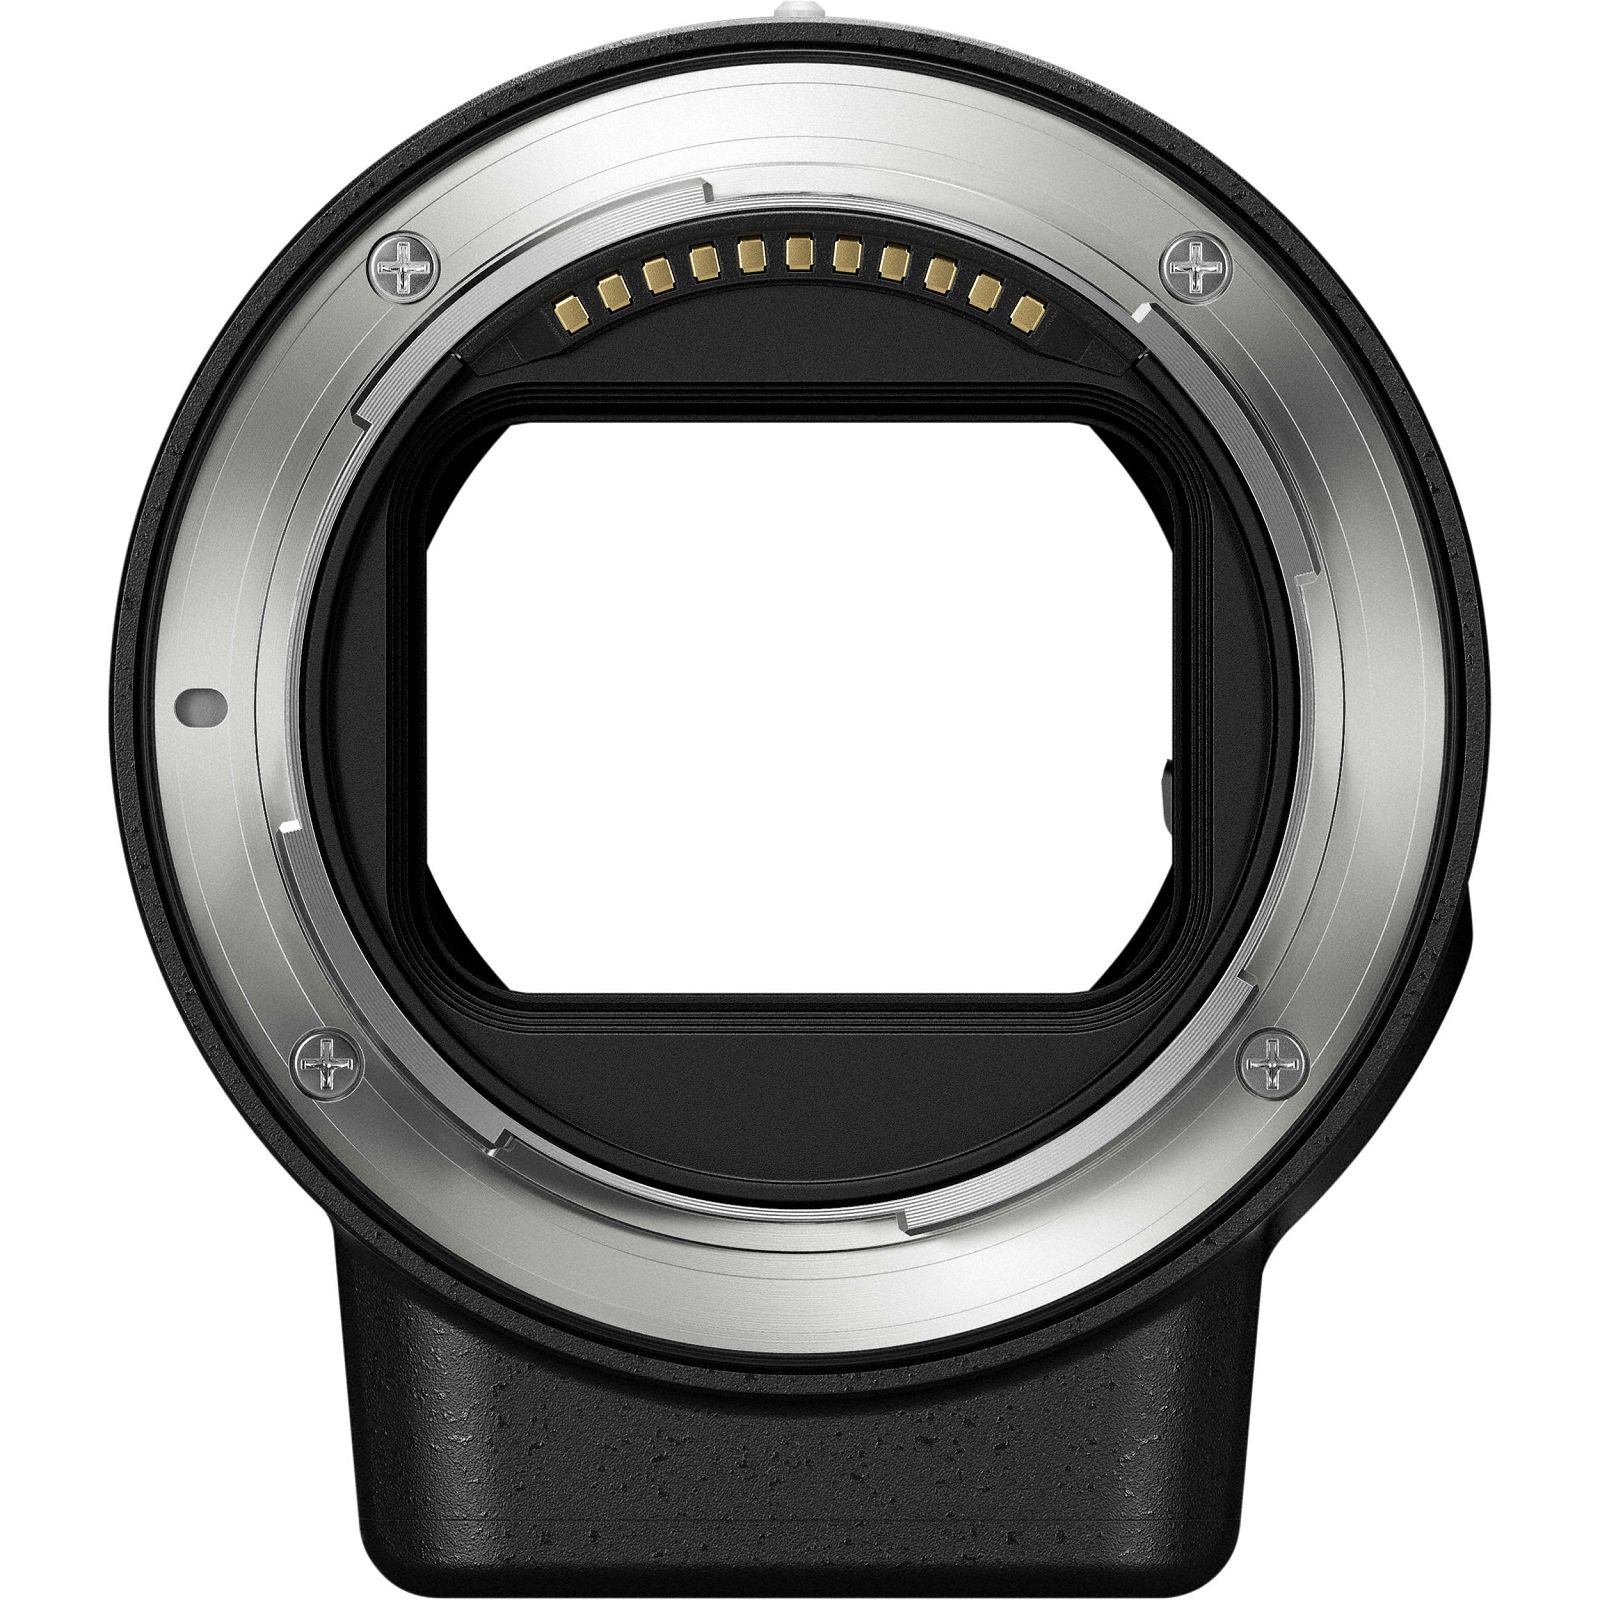 Nikon FTZ Mount Adapter za korištenje Nikon F DX i FX objektiva na Z mount fotoaparatima (JMA901DA)